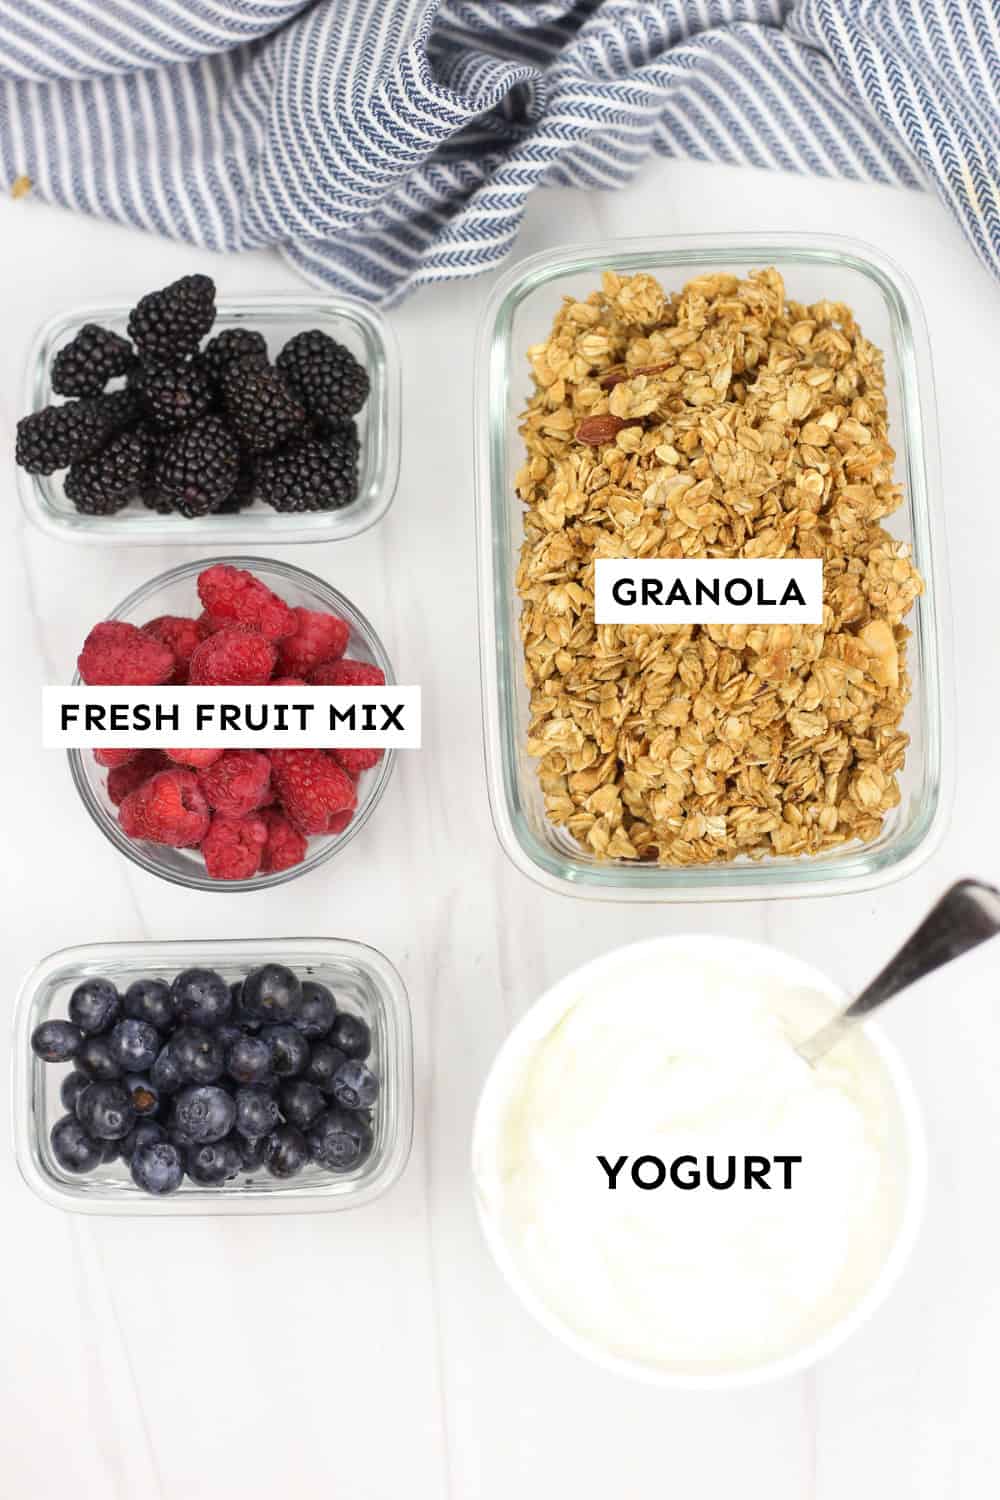 Labeled ingredients for make ahead yogurt parfaits.